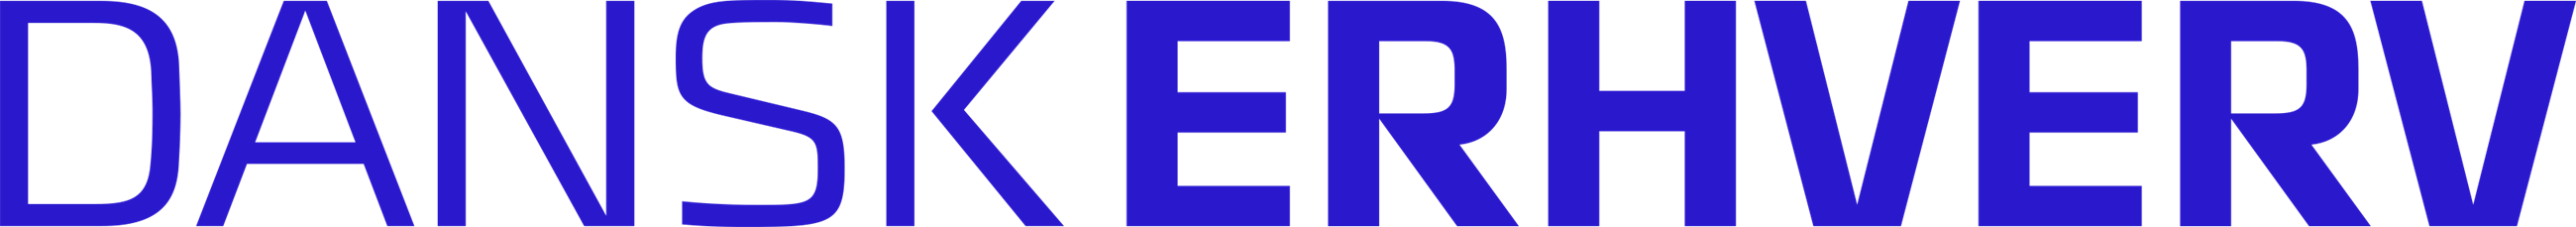 dansk erhverv logo stor